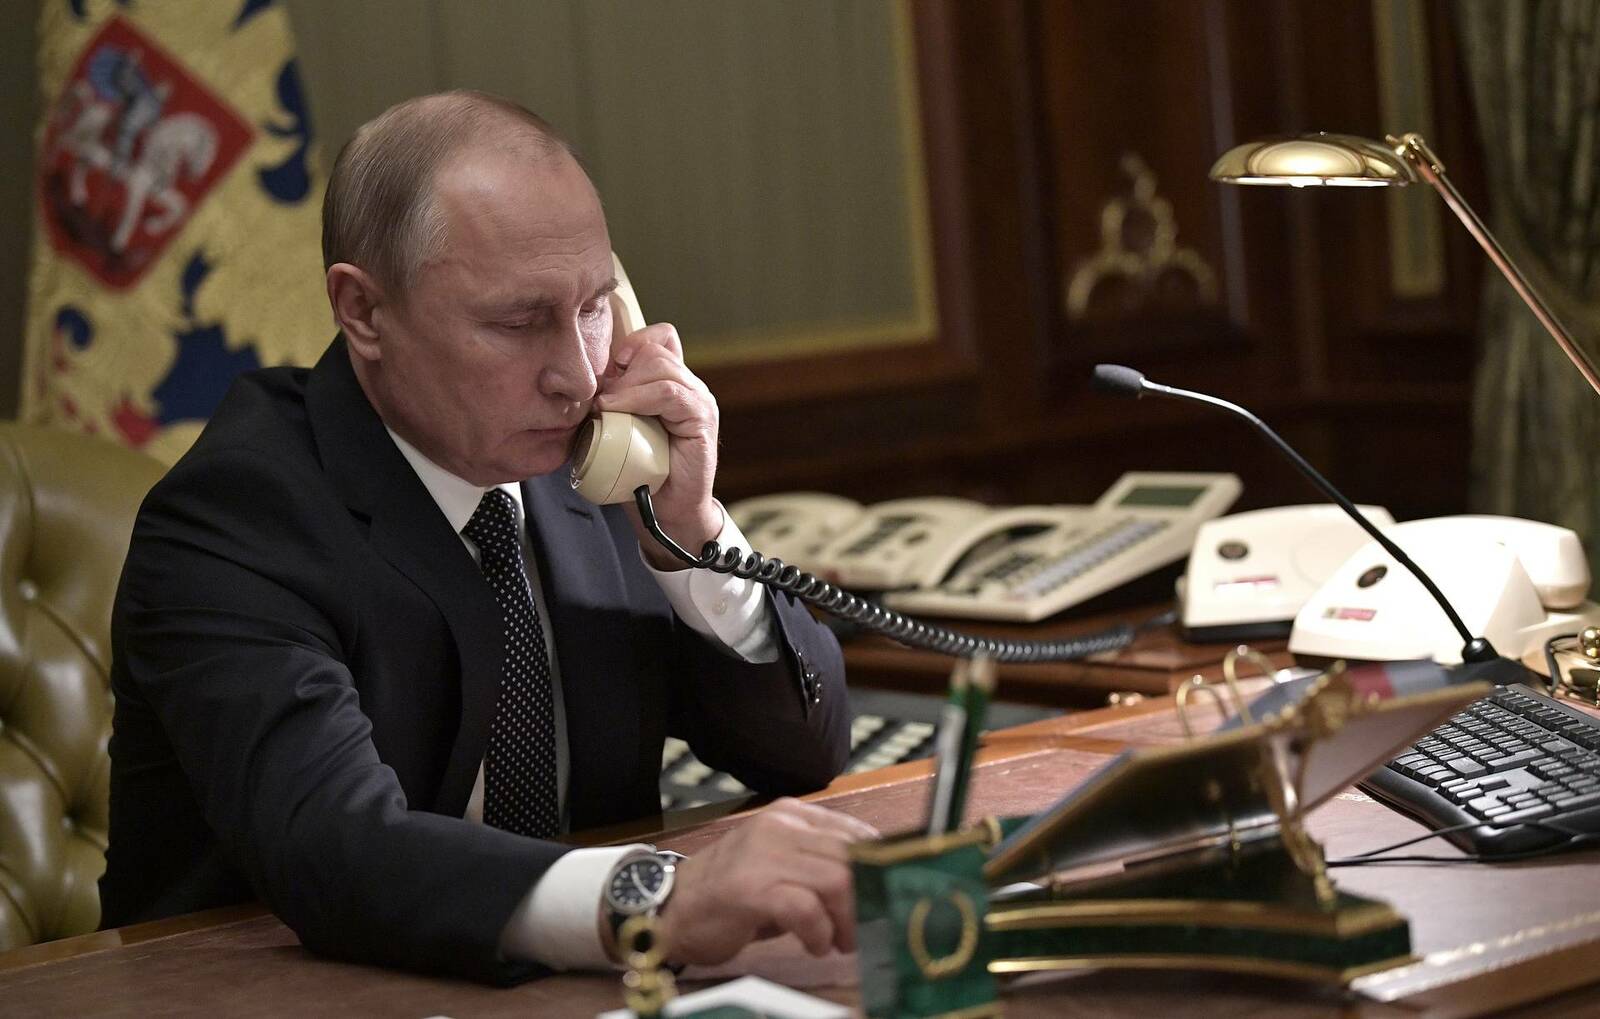 Путин и Пашинян обсудили по телефону ситуацию вокруг Нагорного Карабаха